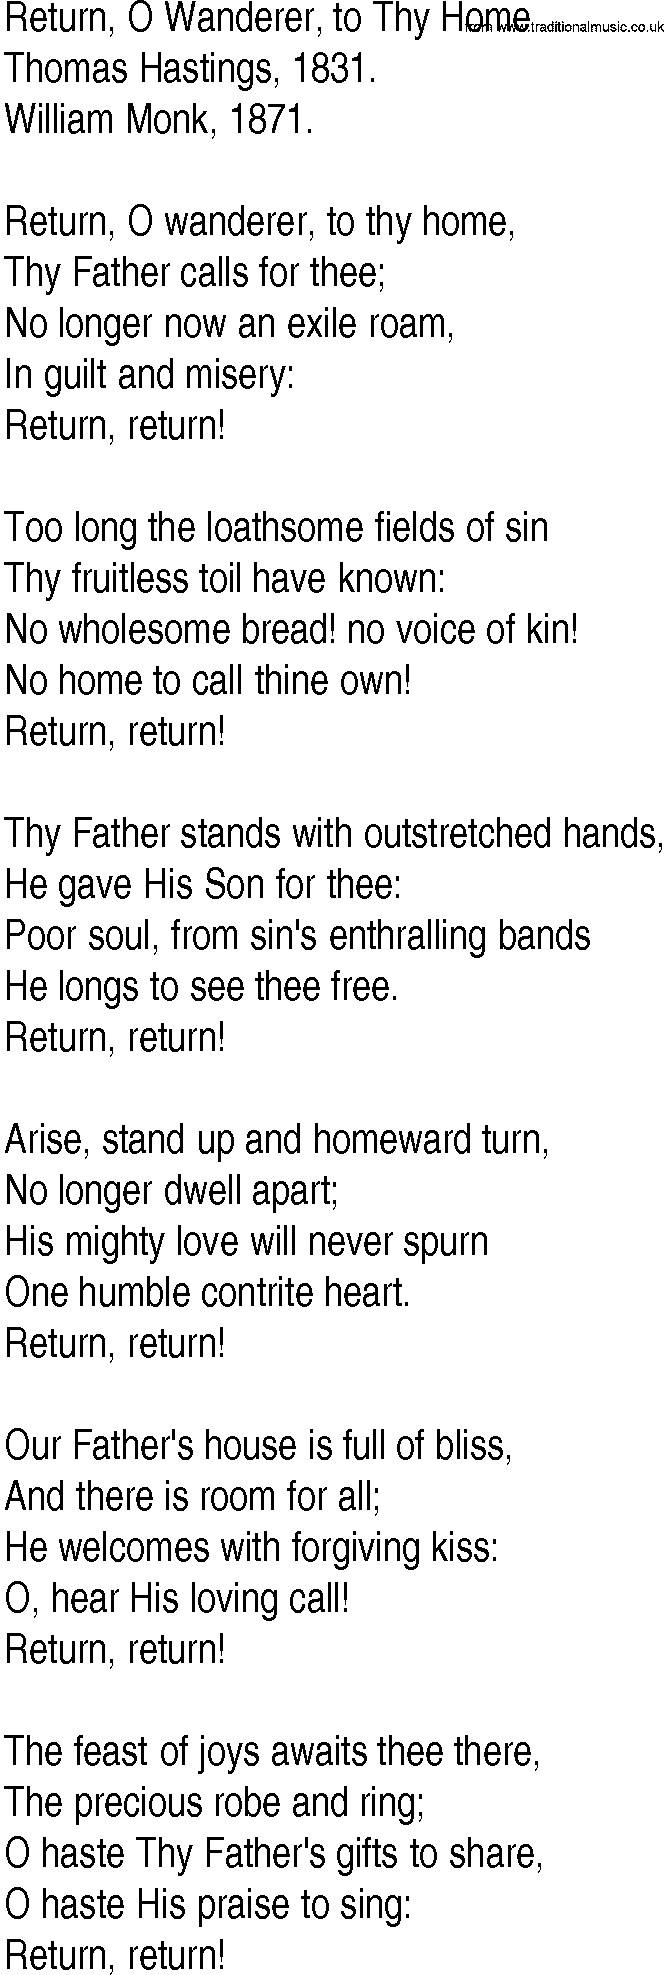 Hymn and Gospel Song: Return, O Wanderer, to Thy Home by Thomas Hastings lyrics